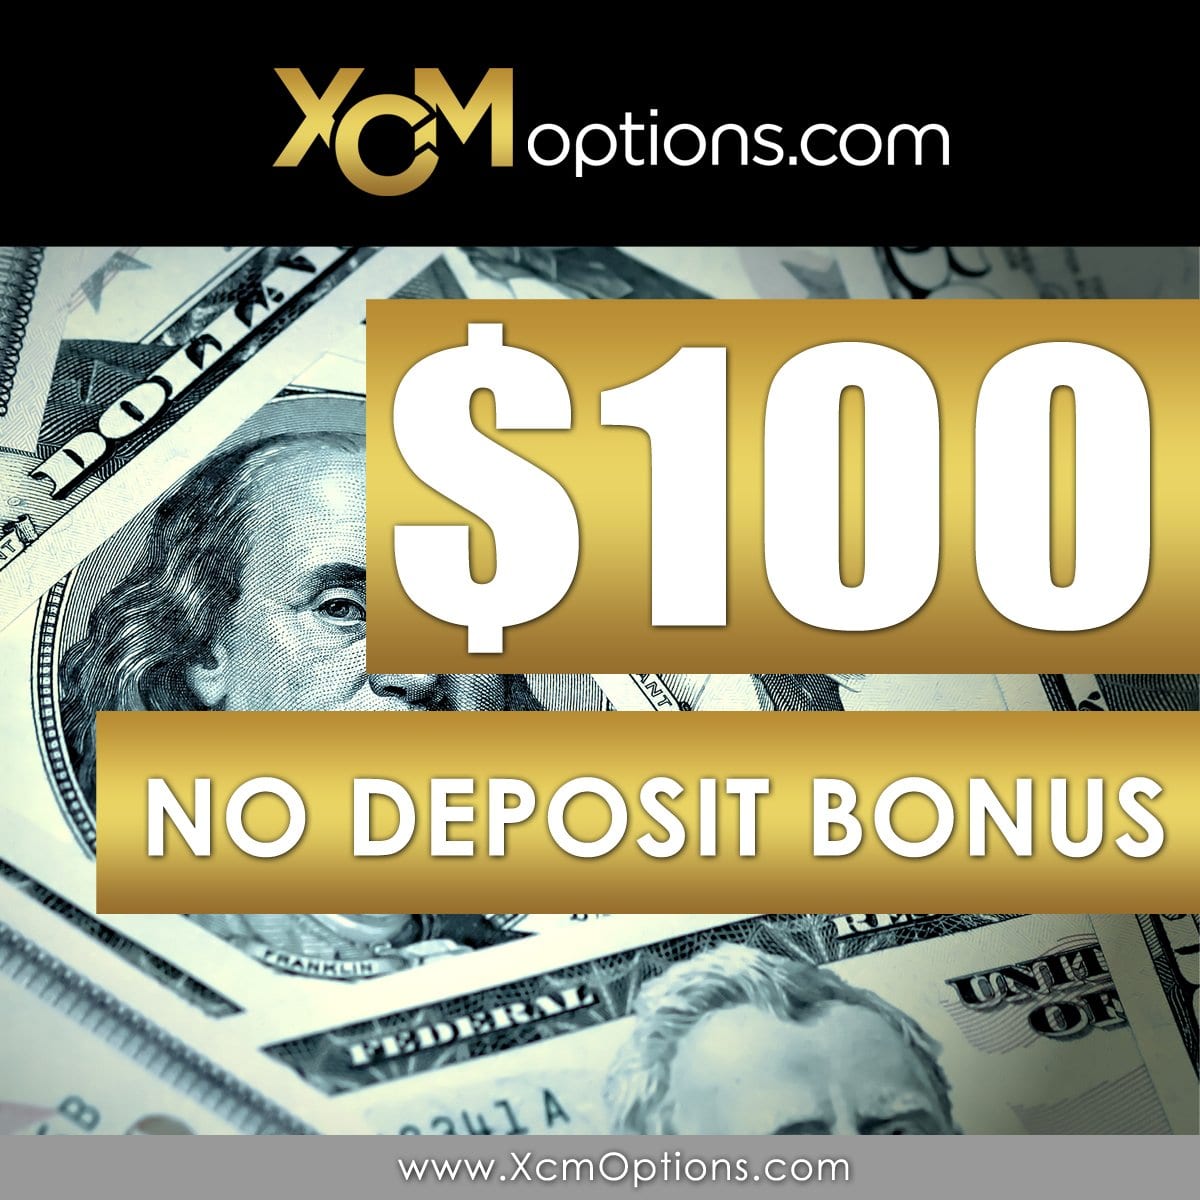 Binary options no deposit needed 100 free bonus